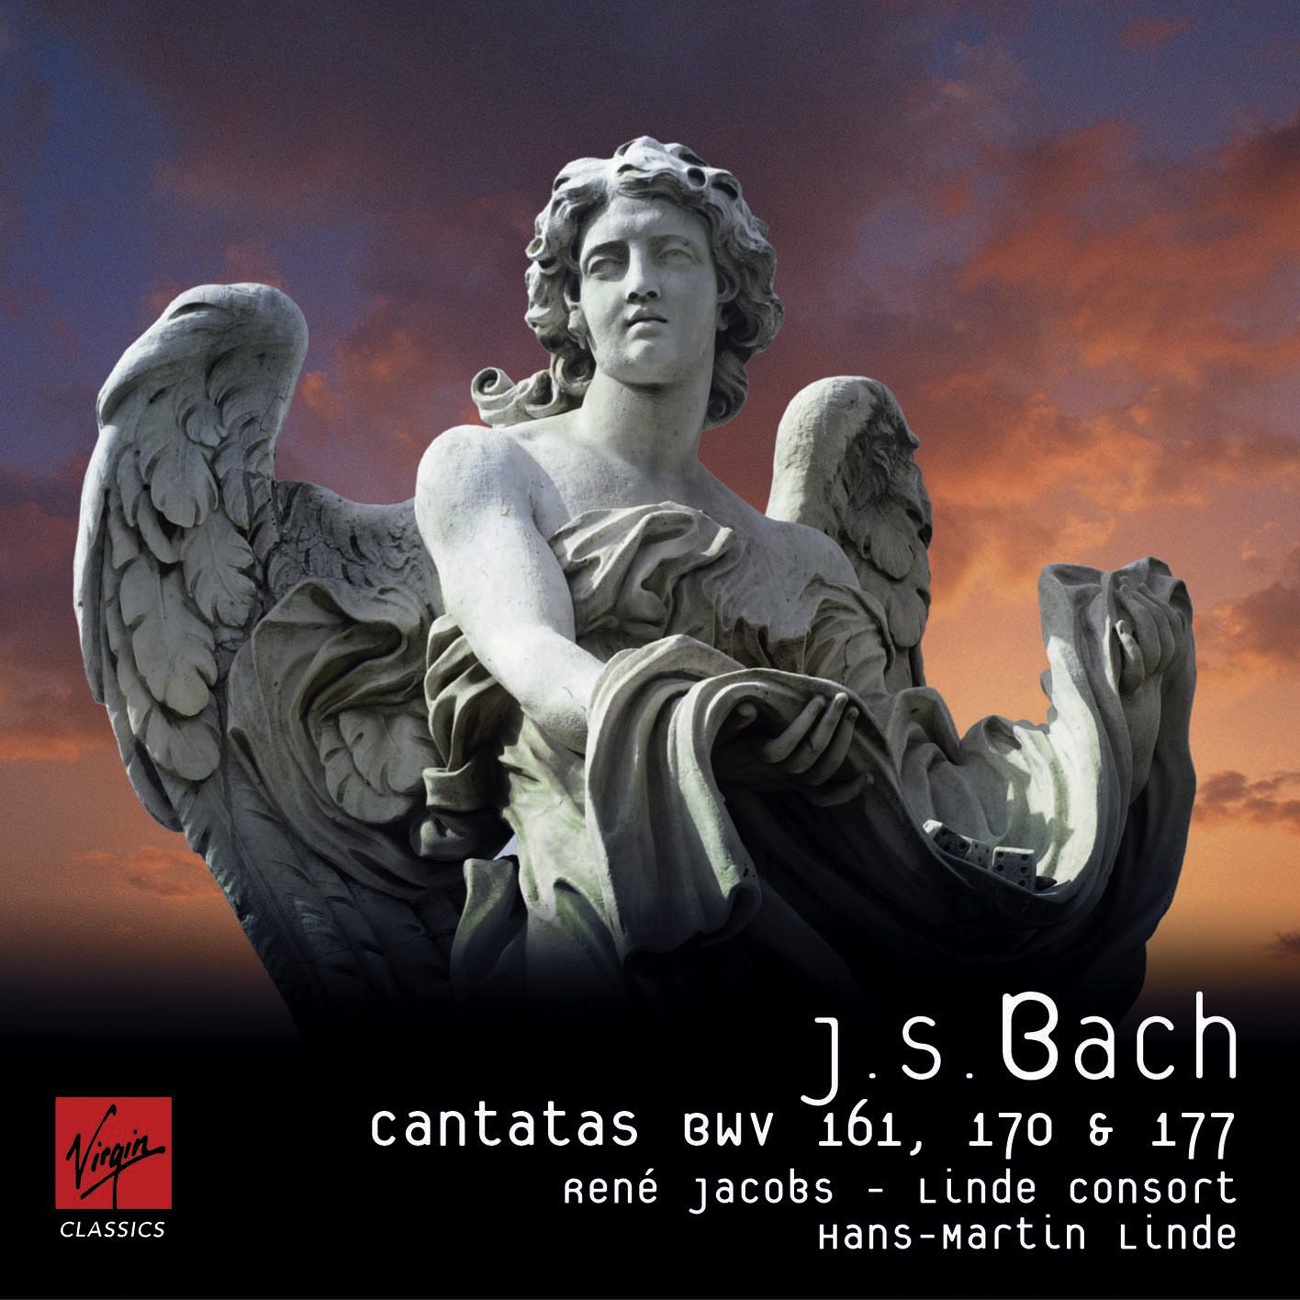 Cantata No. 170: Vergnü gte Ruh, beliebte Seelenlust BWV170 1997 Digital Remaster: Aria: Vergnü gte Ruh, beliebte Seelenlust